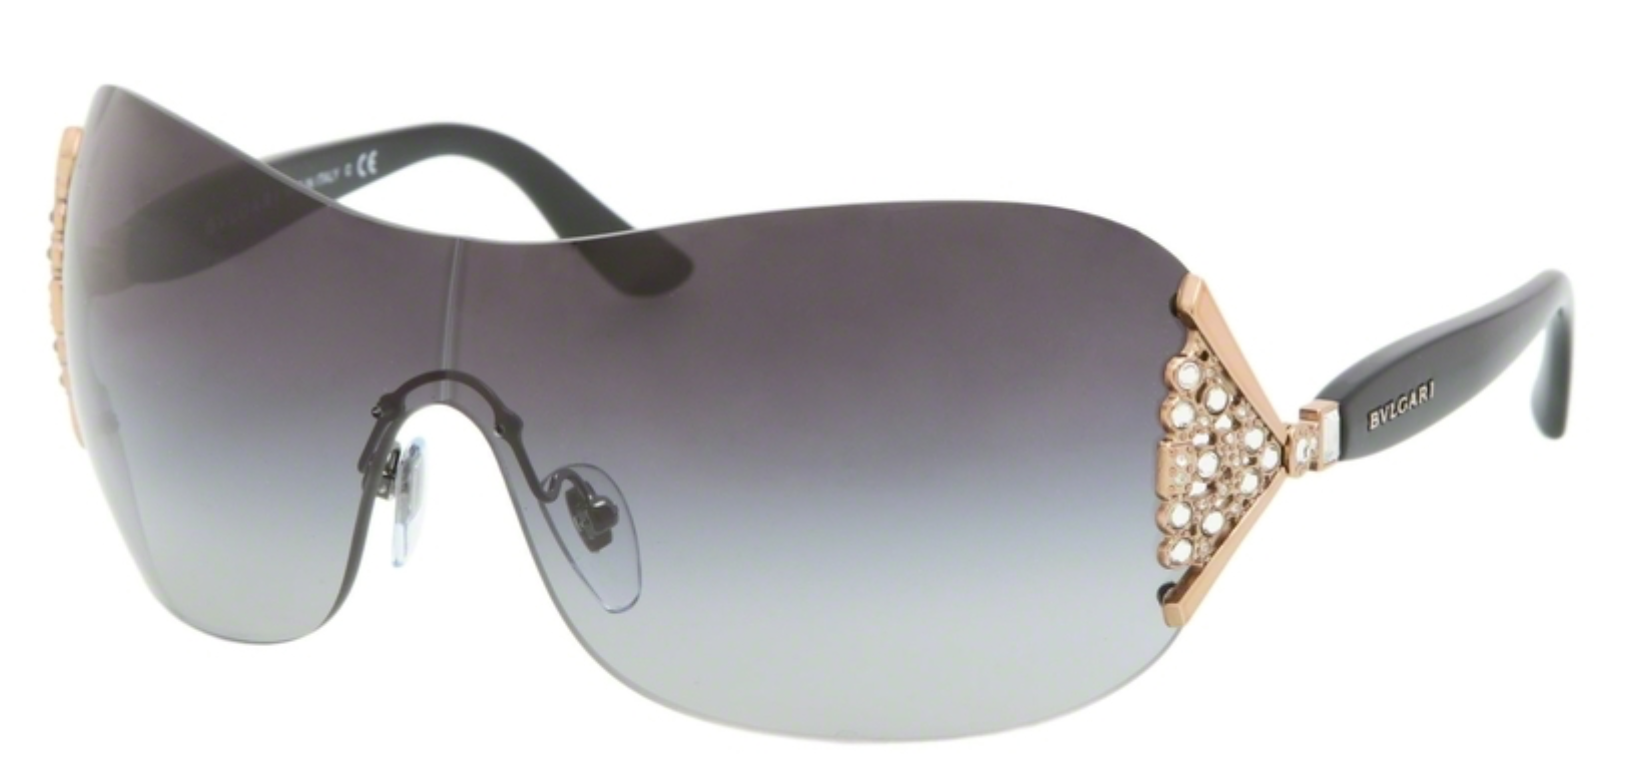 Bvlgari Sunglasses BV8235 501 8G 55 - The Optic Shop